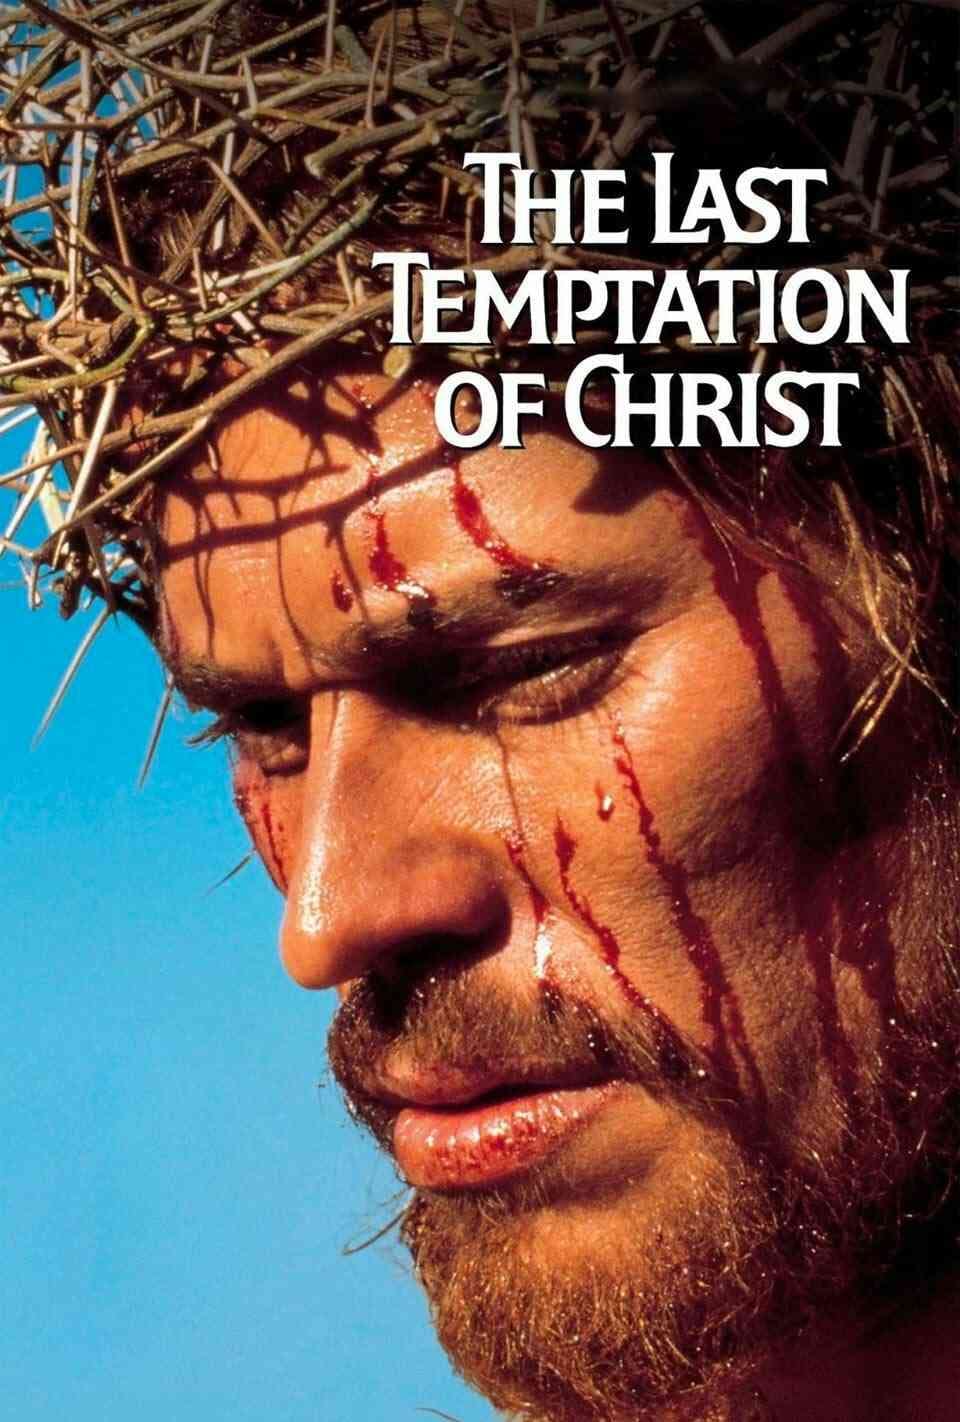 Read The Last Temptation of Christ screenplay.